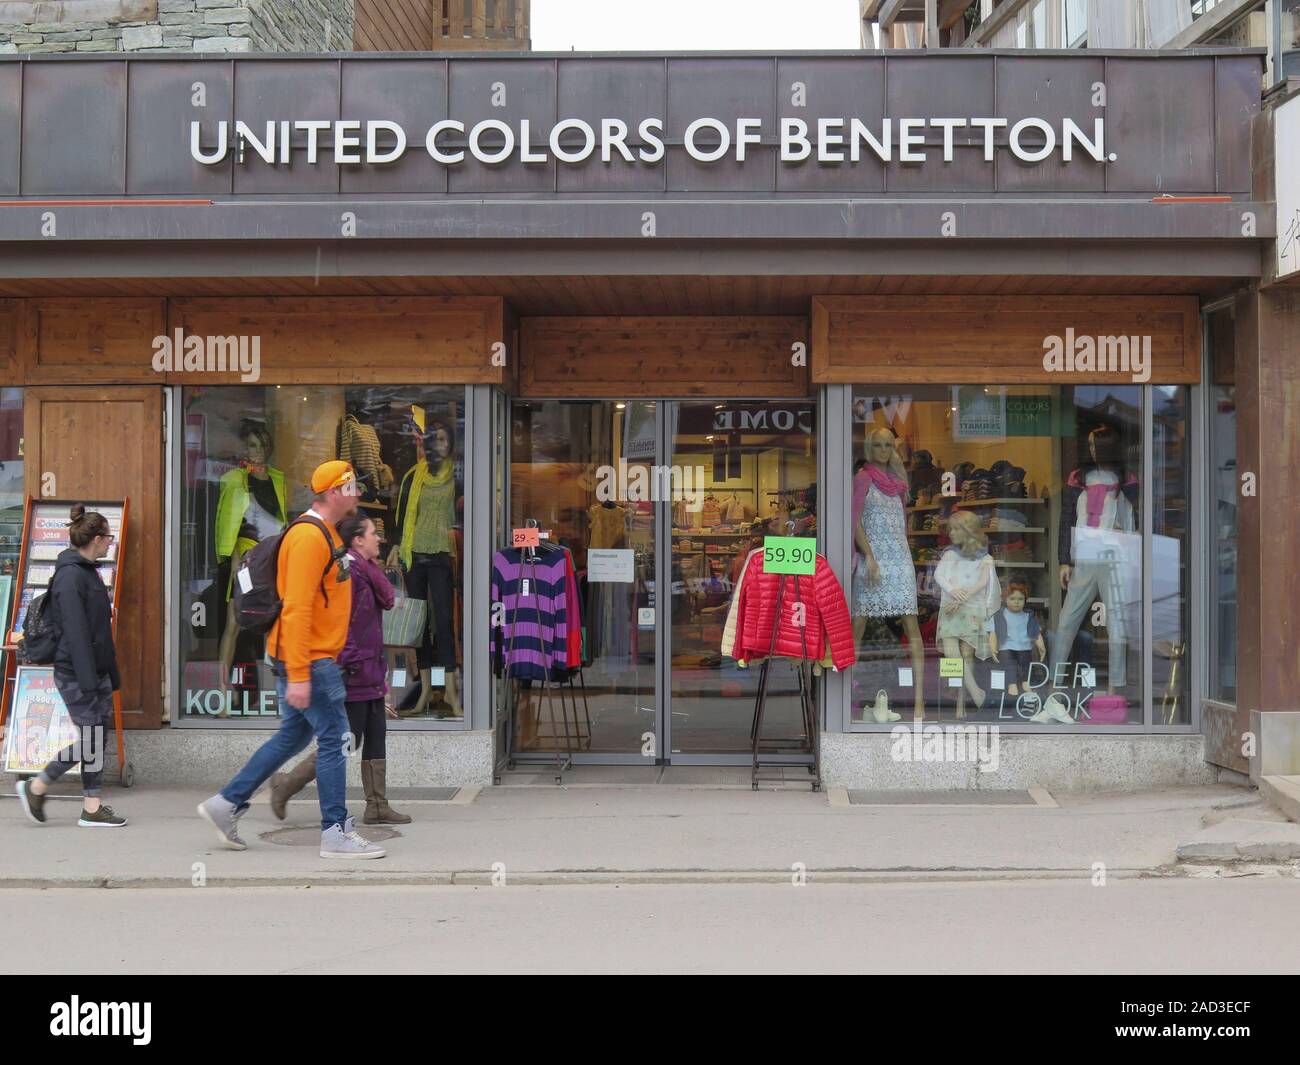 United colors of benetton fotografías e imágenes de alta resolución - Alamy